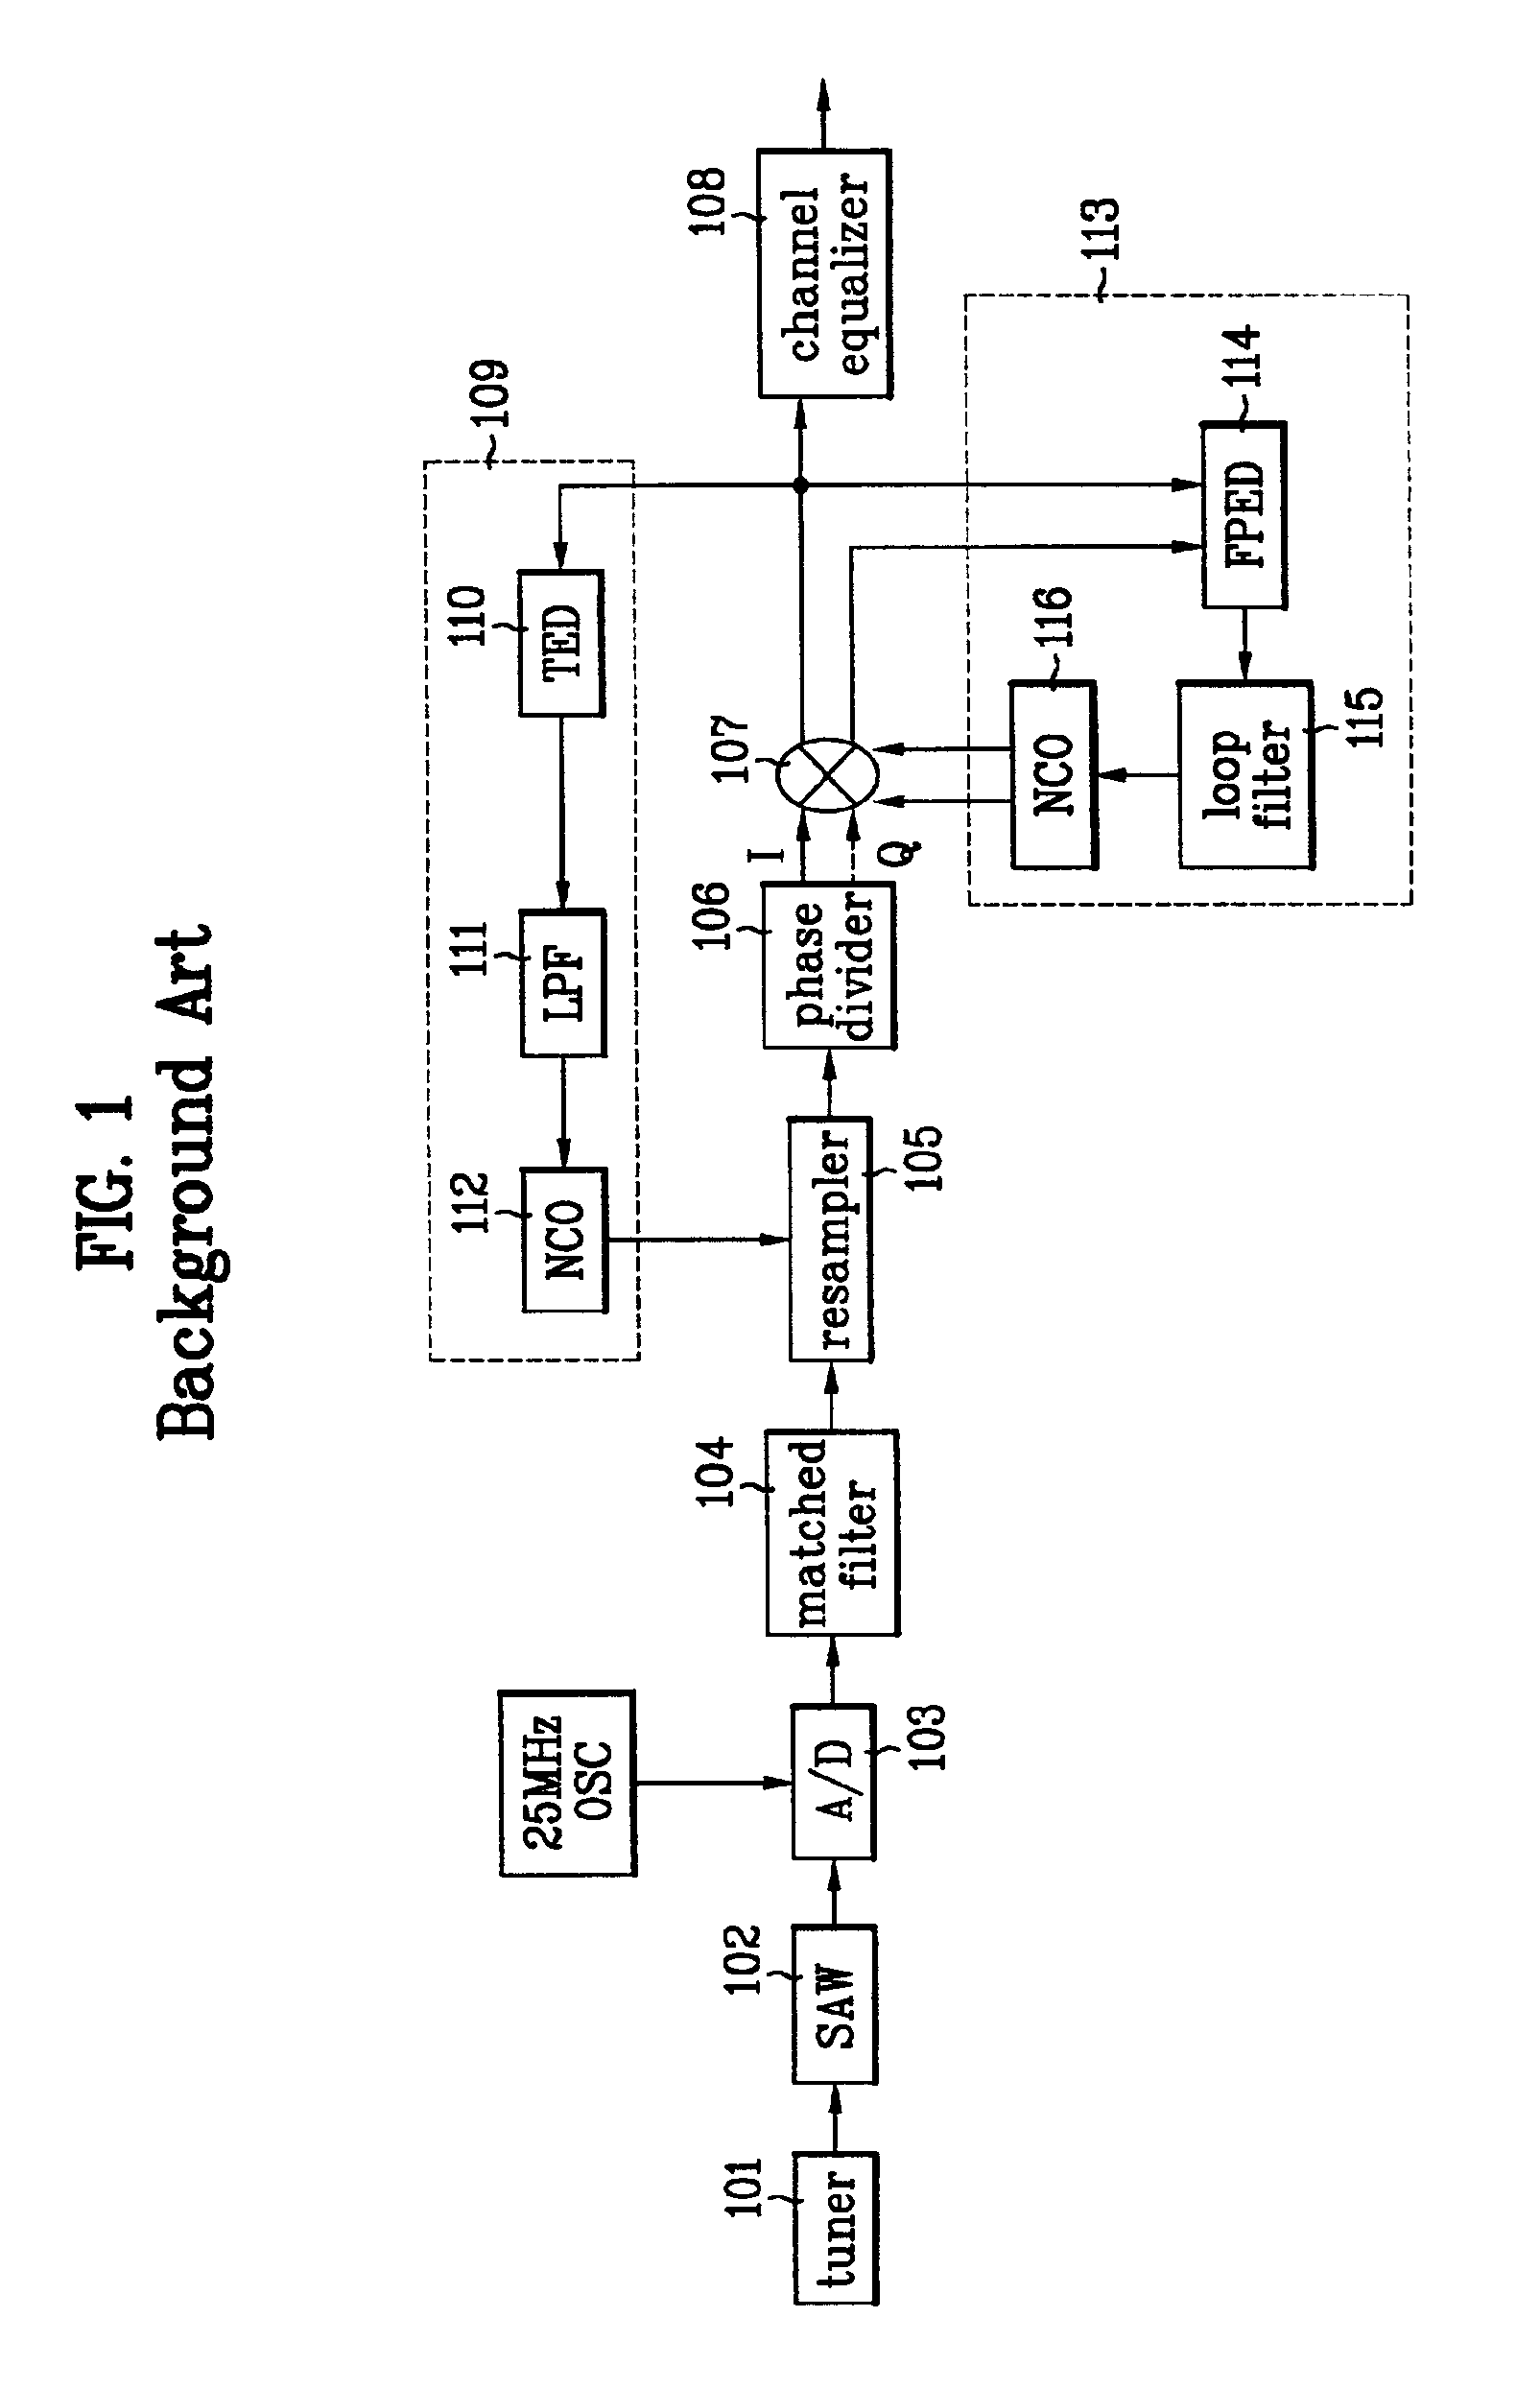 Digital demodulating device in a digital TV receiver